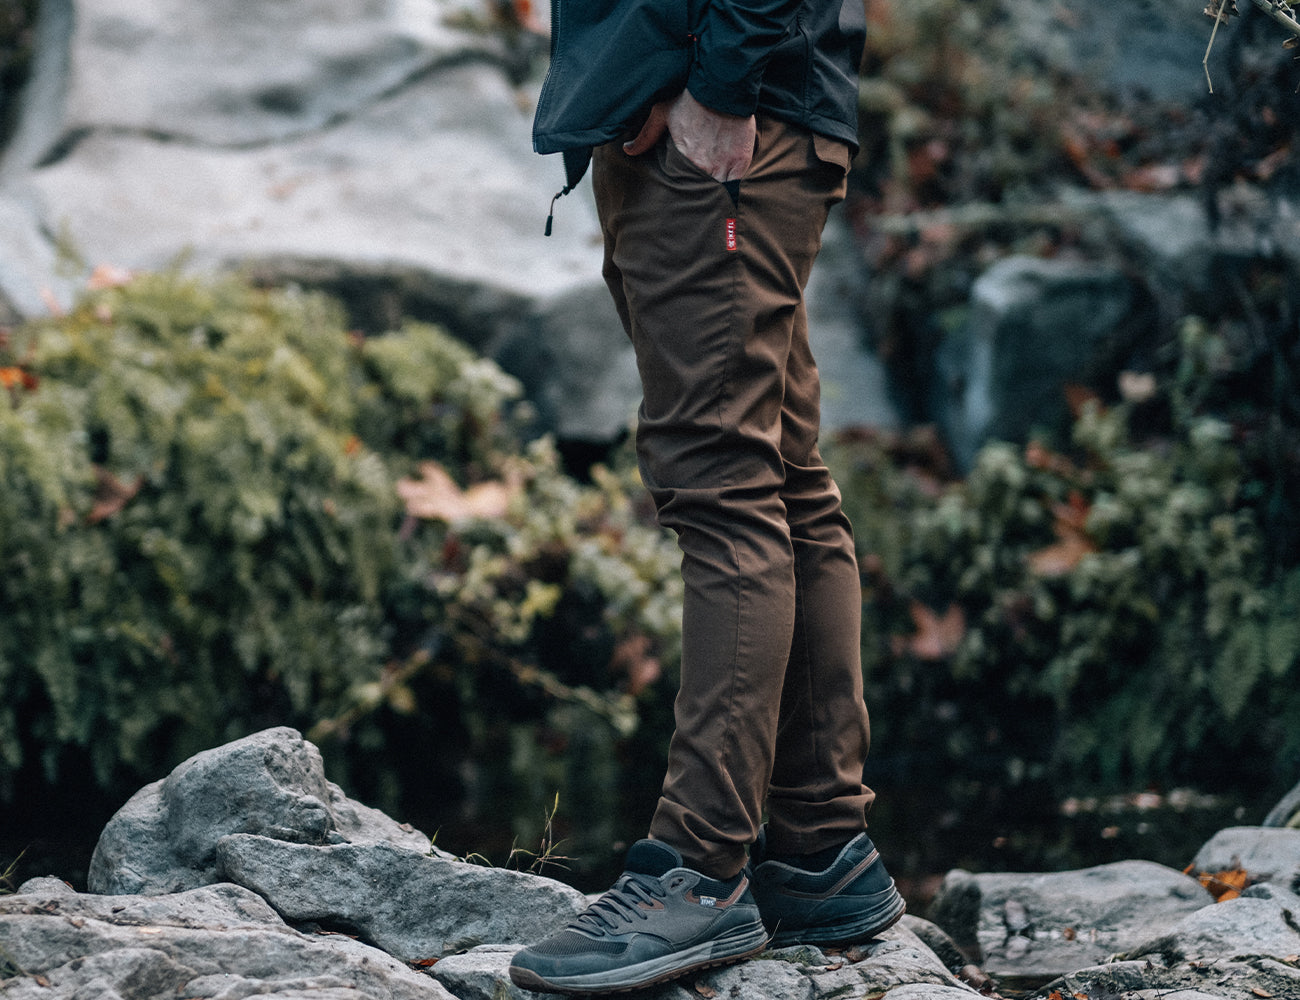 KETL Mtn Shenanigan Hiking Pants 32 Inseam - Lightweight, Stretchy,  Packable, Adventure Travel Men's Pants Brown